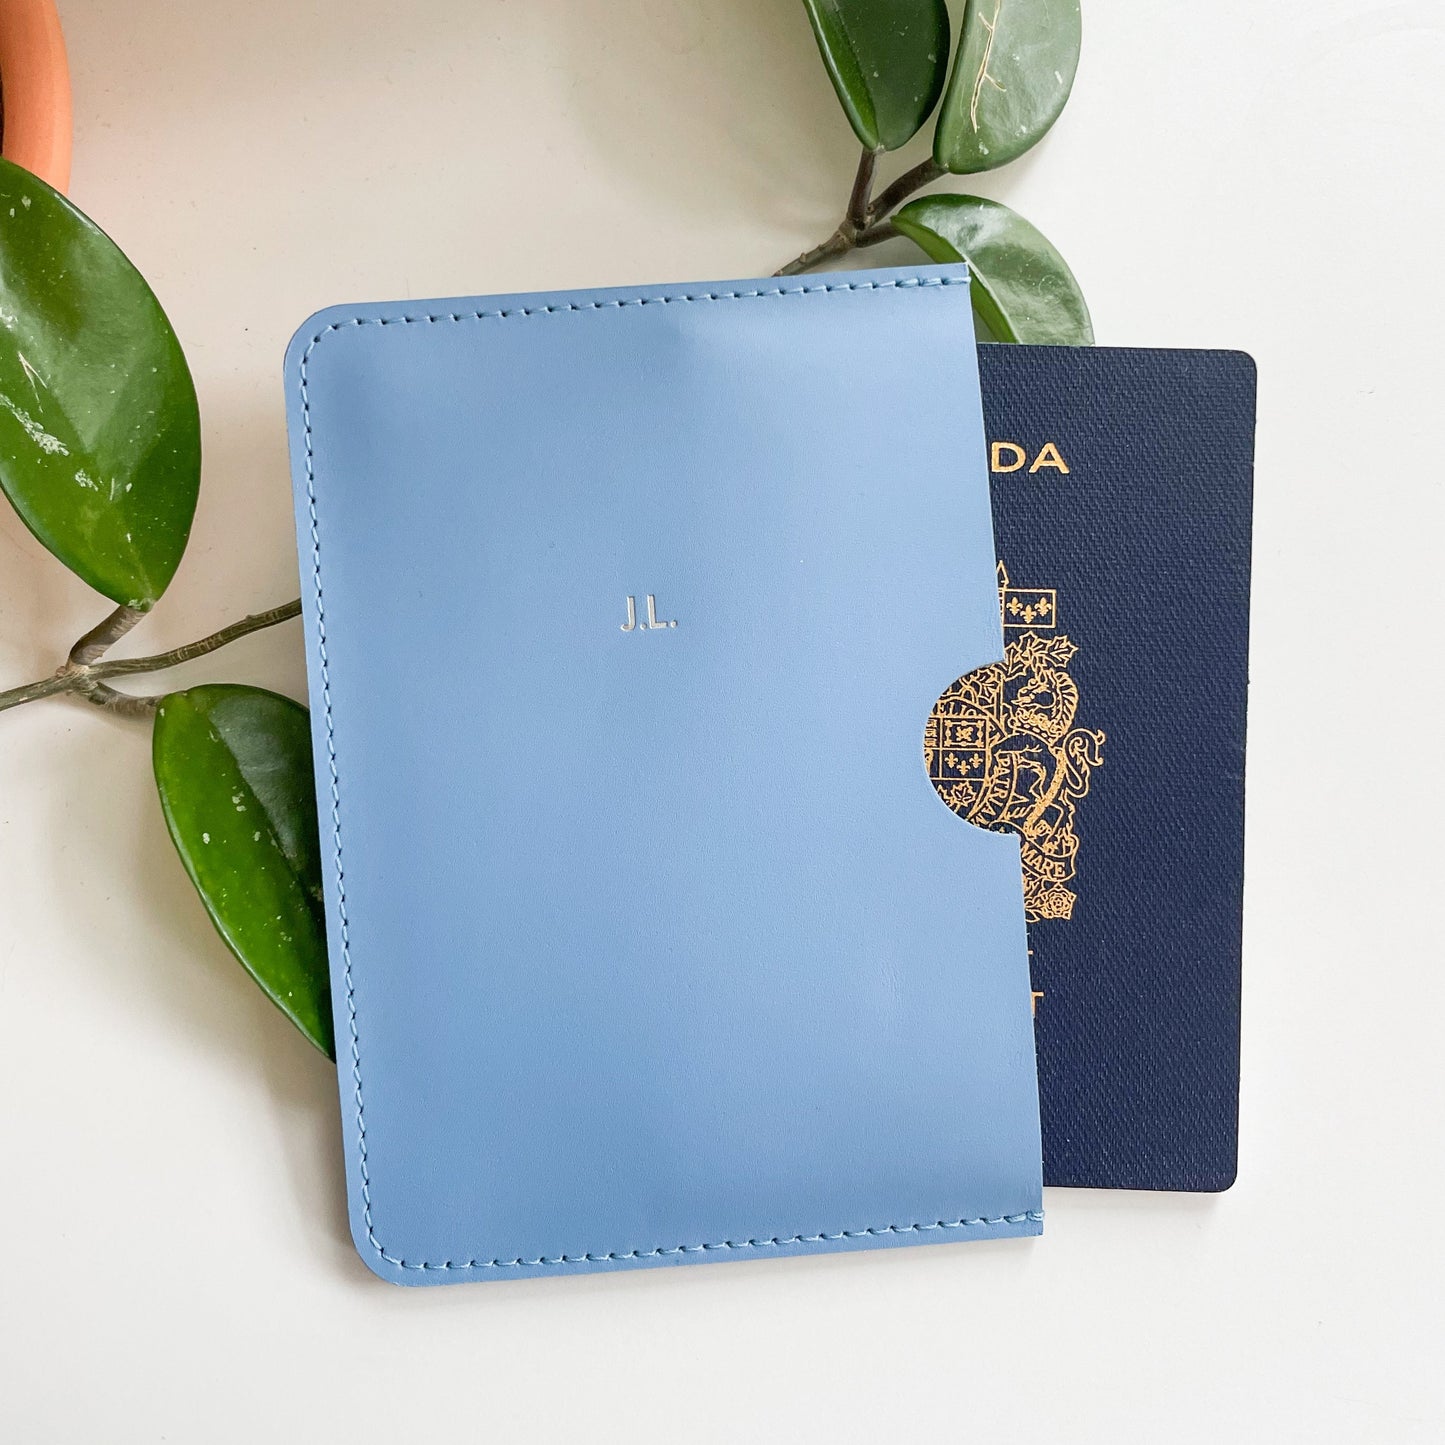 Passport Sleeve with Card Pocket | Midnight